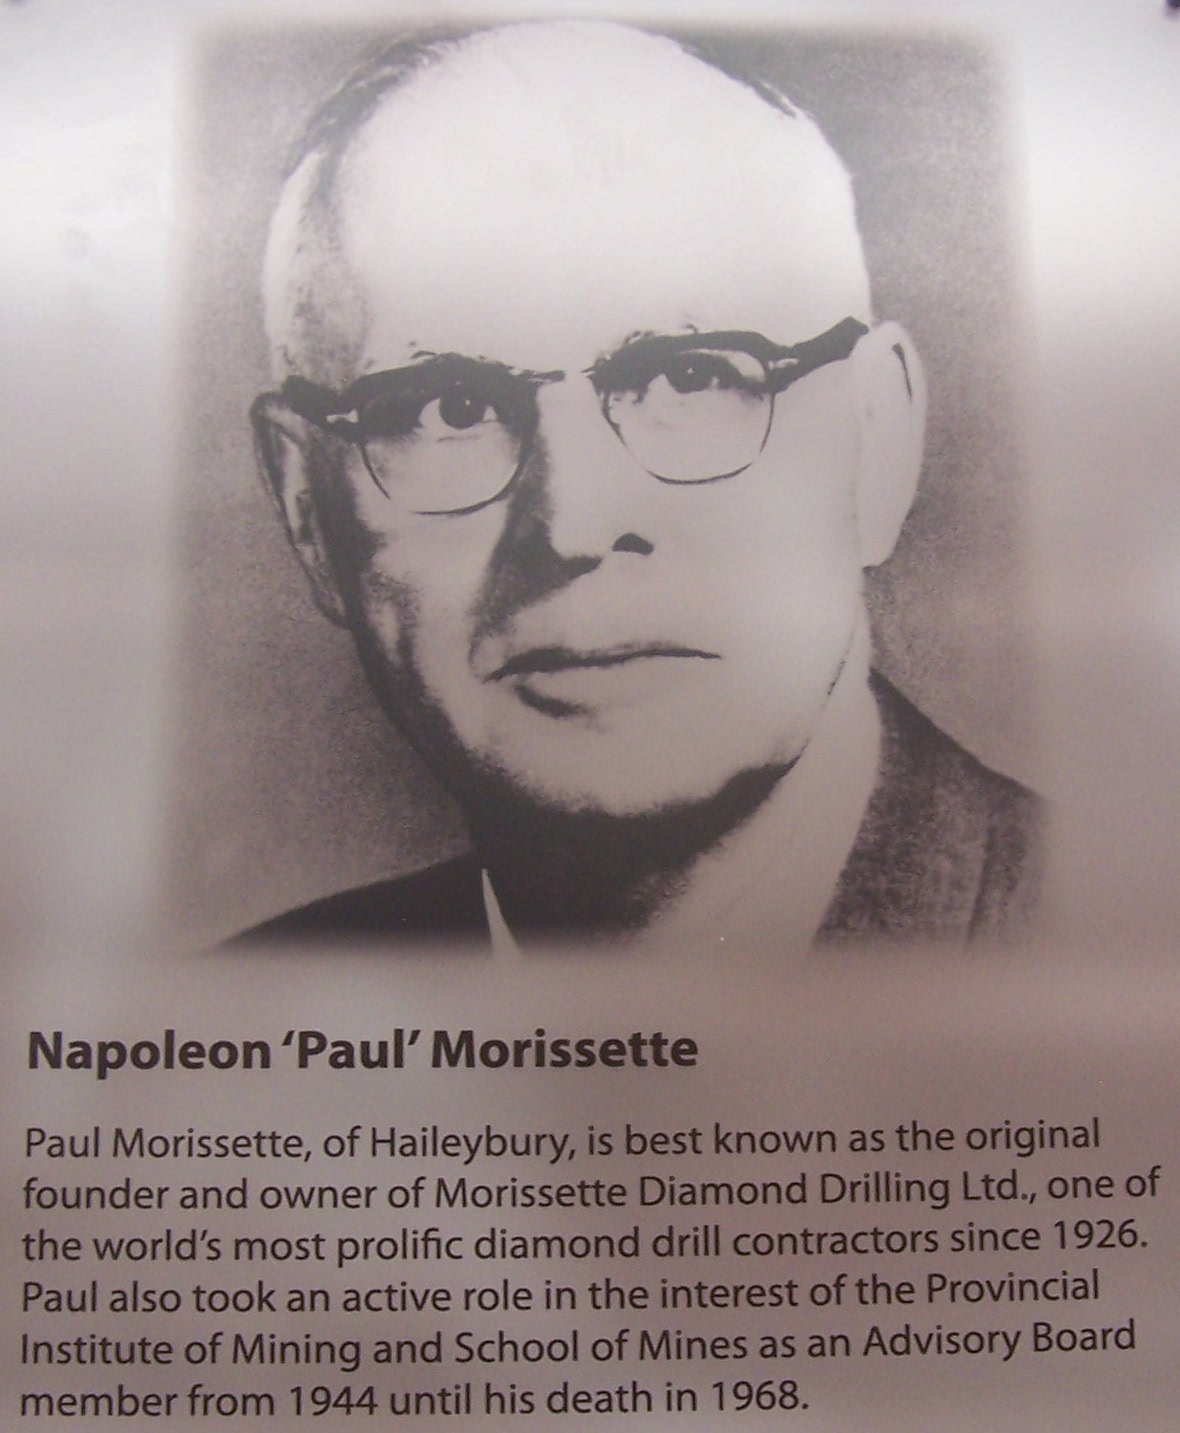 Napoléon (Paul) Morissette, started Norissette Diamond Drilling in Haileybury